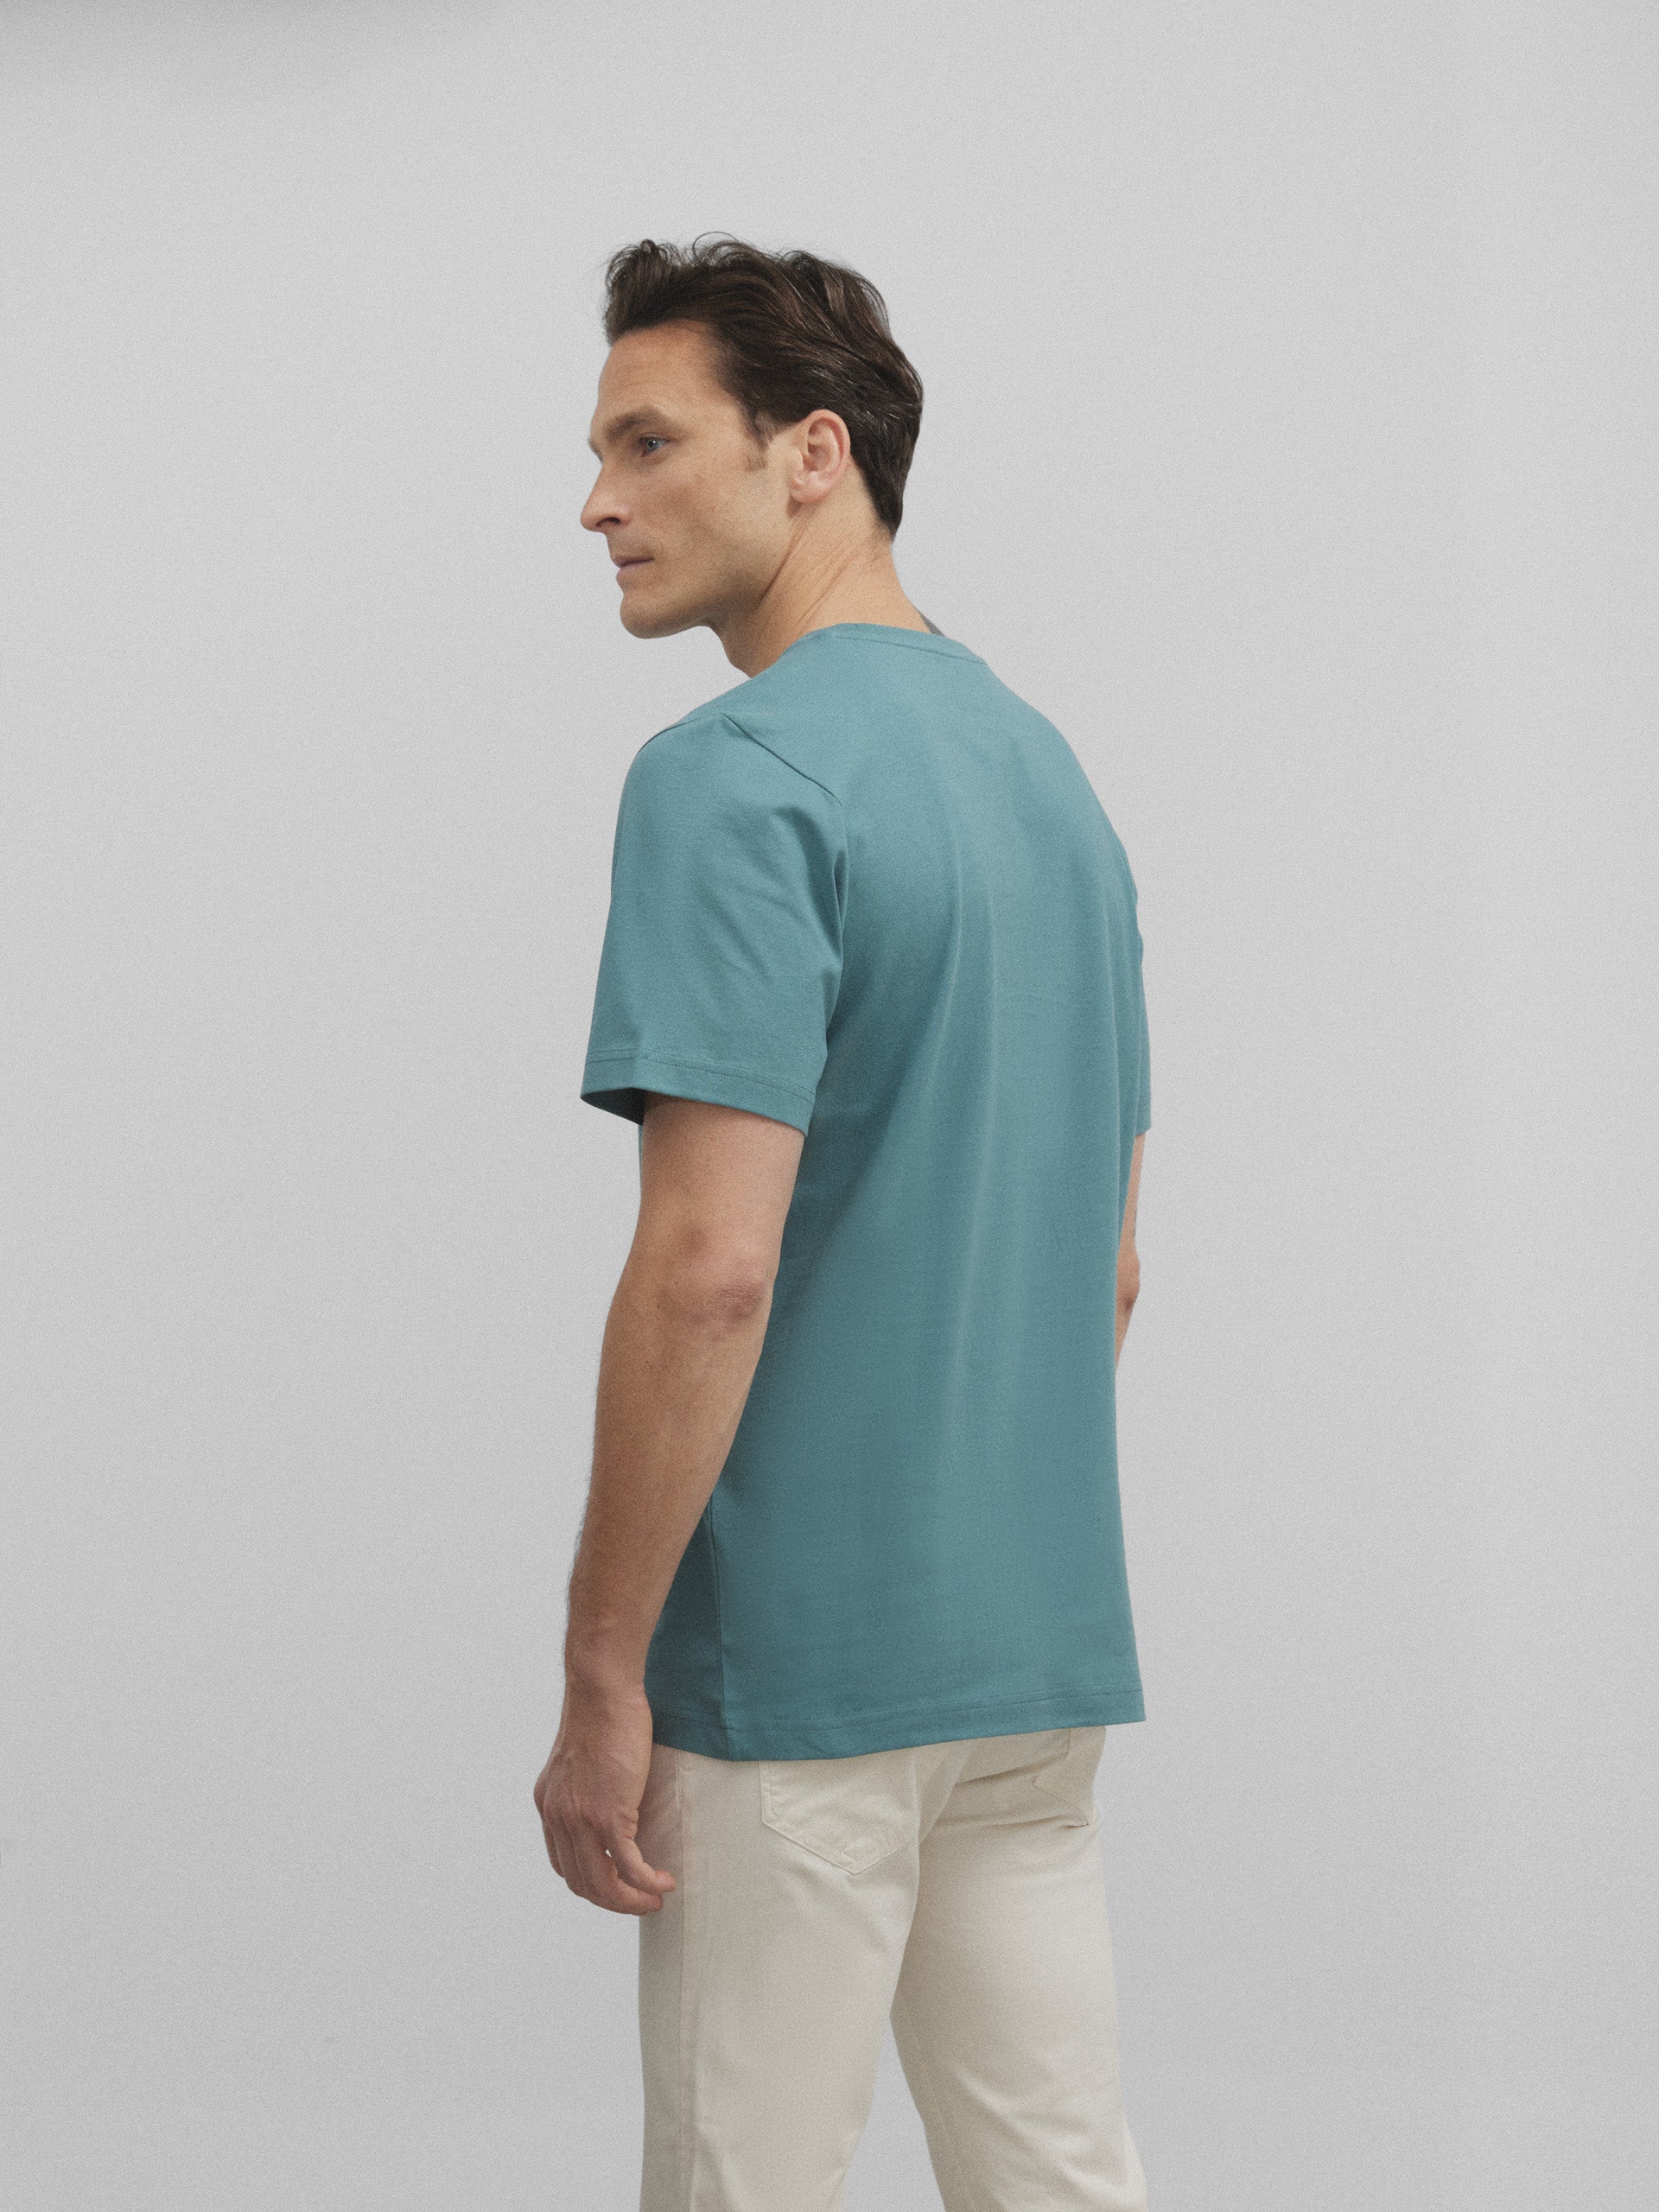 Camiseta silbon minilogo verde medio